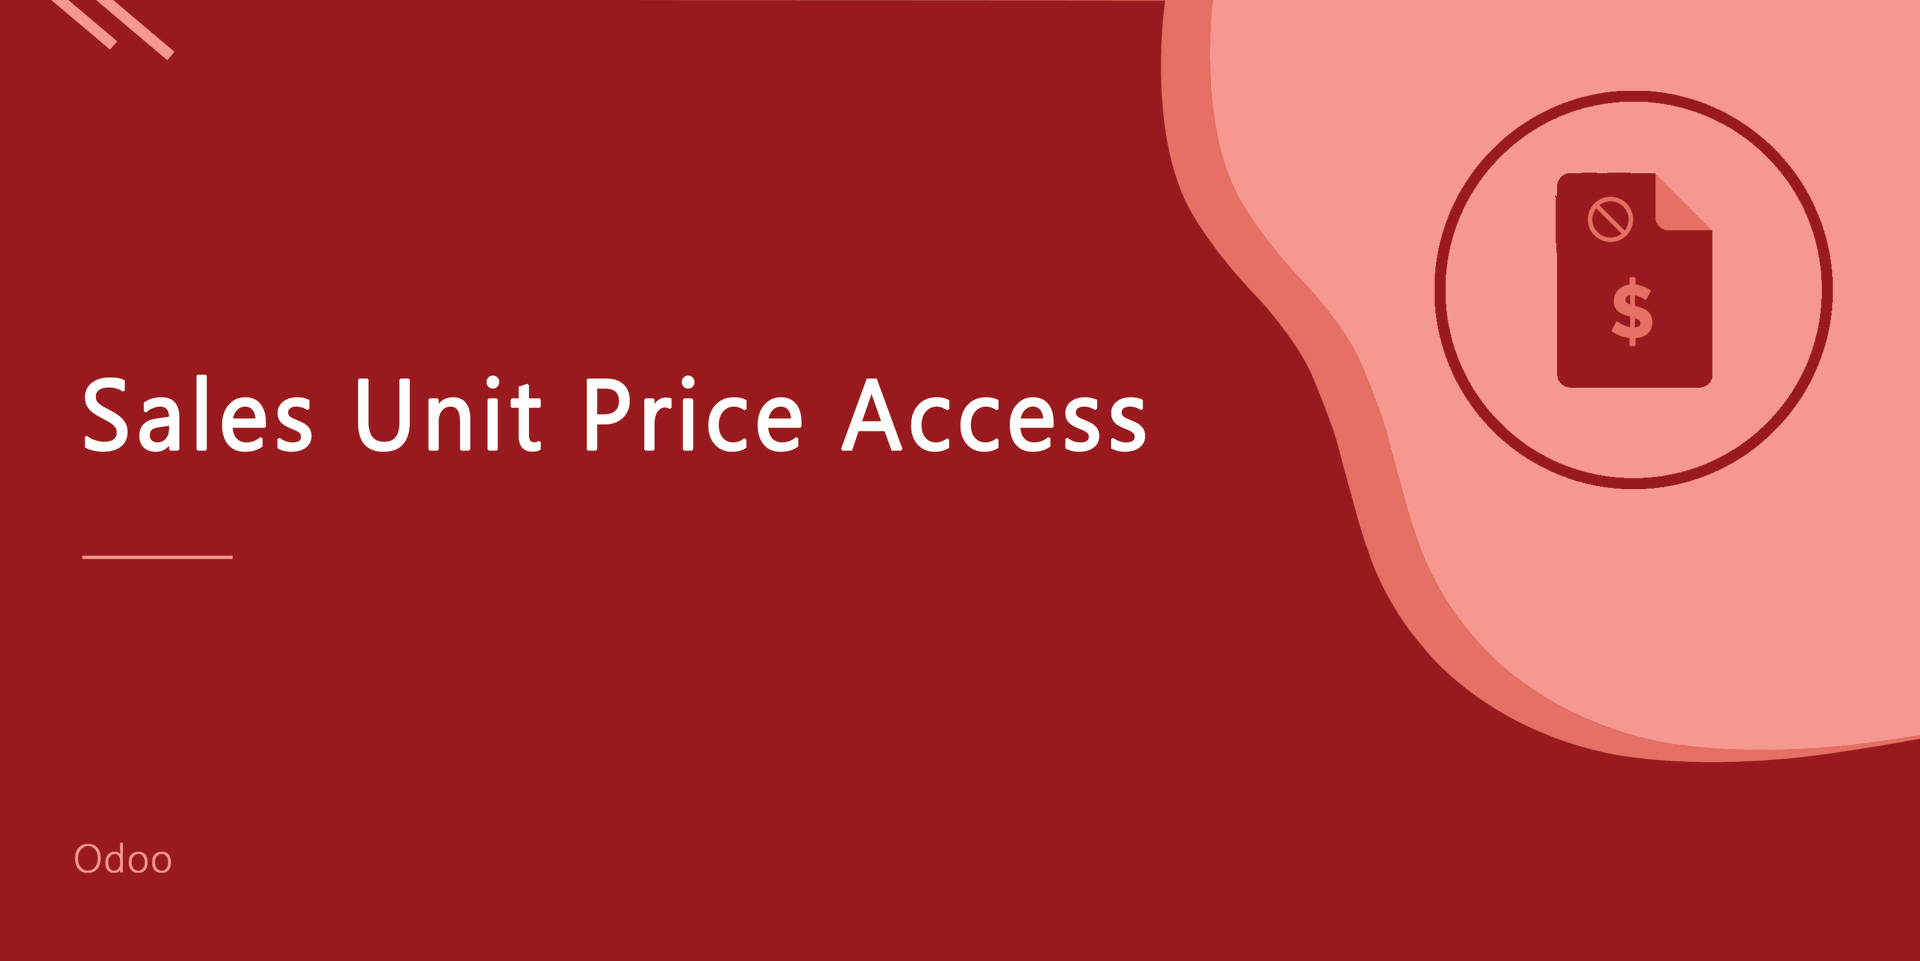 Sales Unit Price Access
